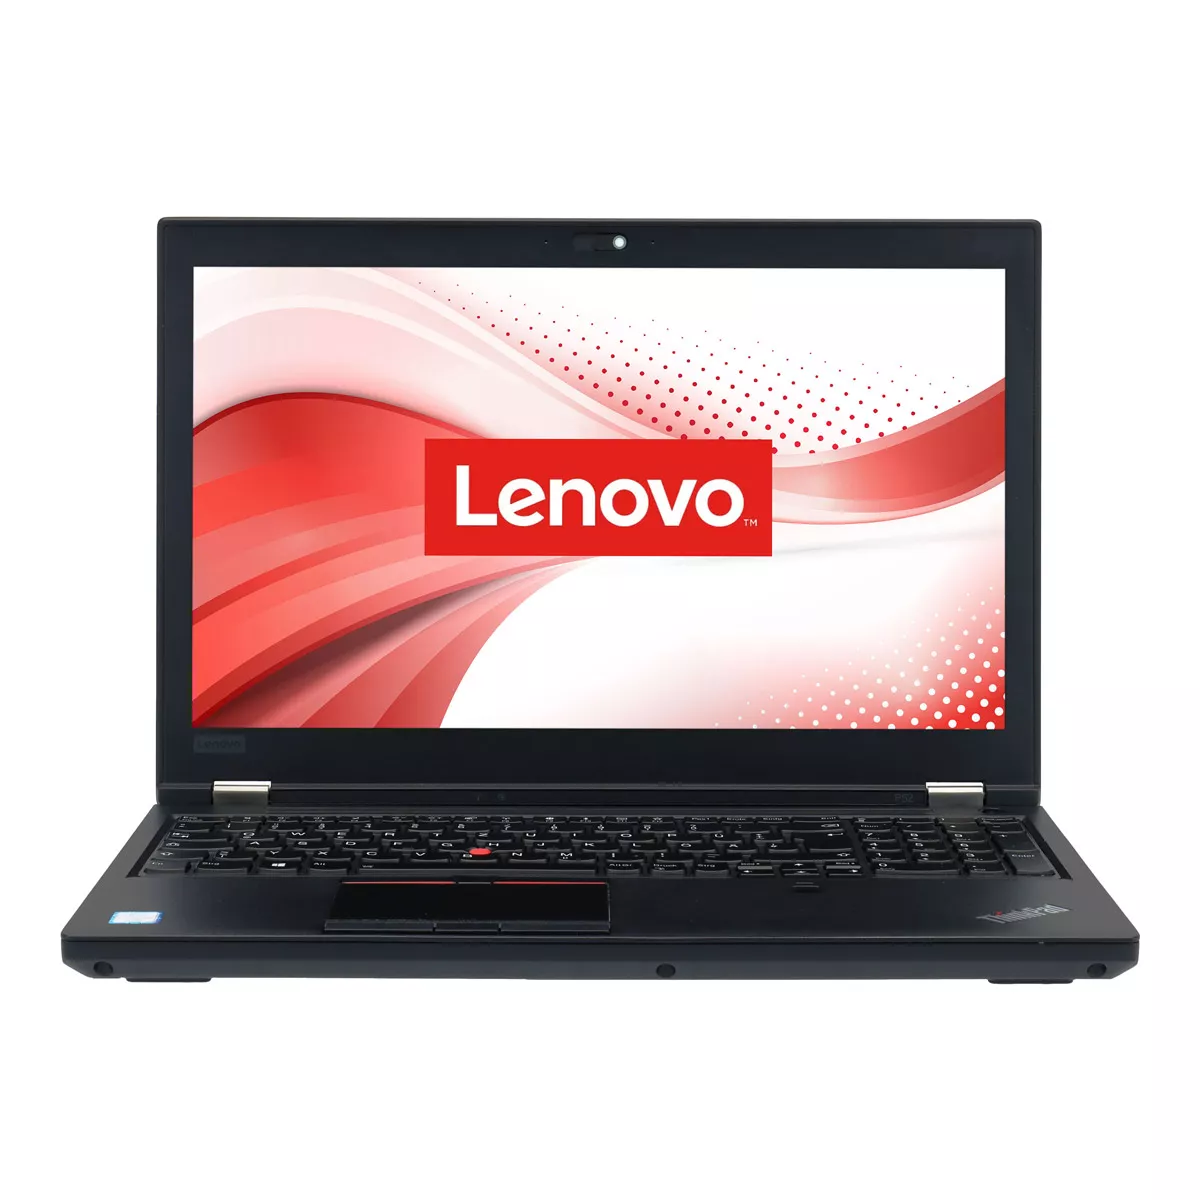 Lenovo ThinkPad P52 Core i9 8950HK nVidia Quadro P3200M 32 GB 500 GB M.2 nVME SSD Webcam A